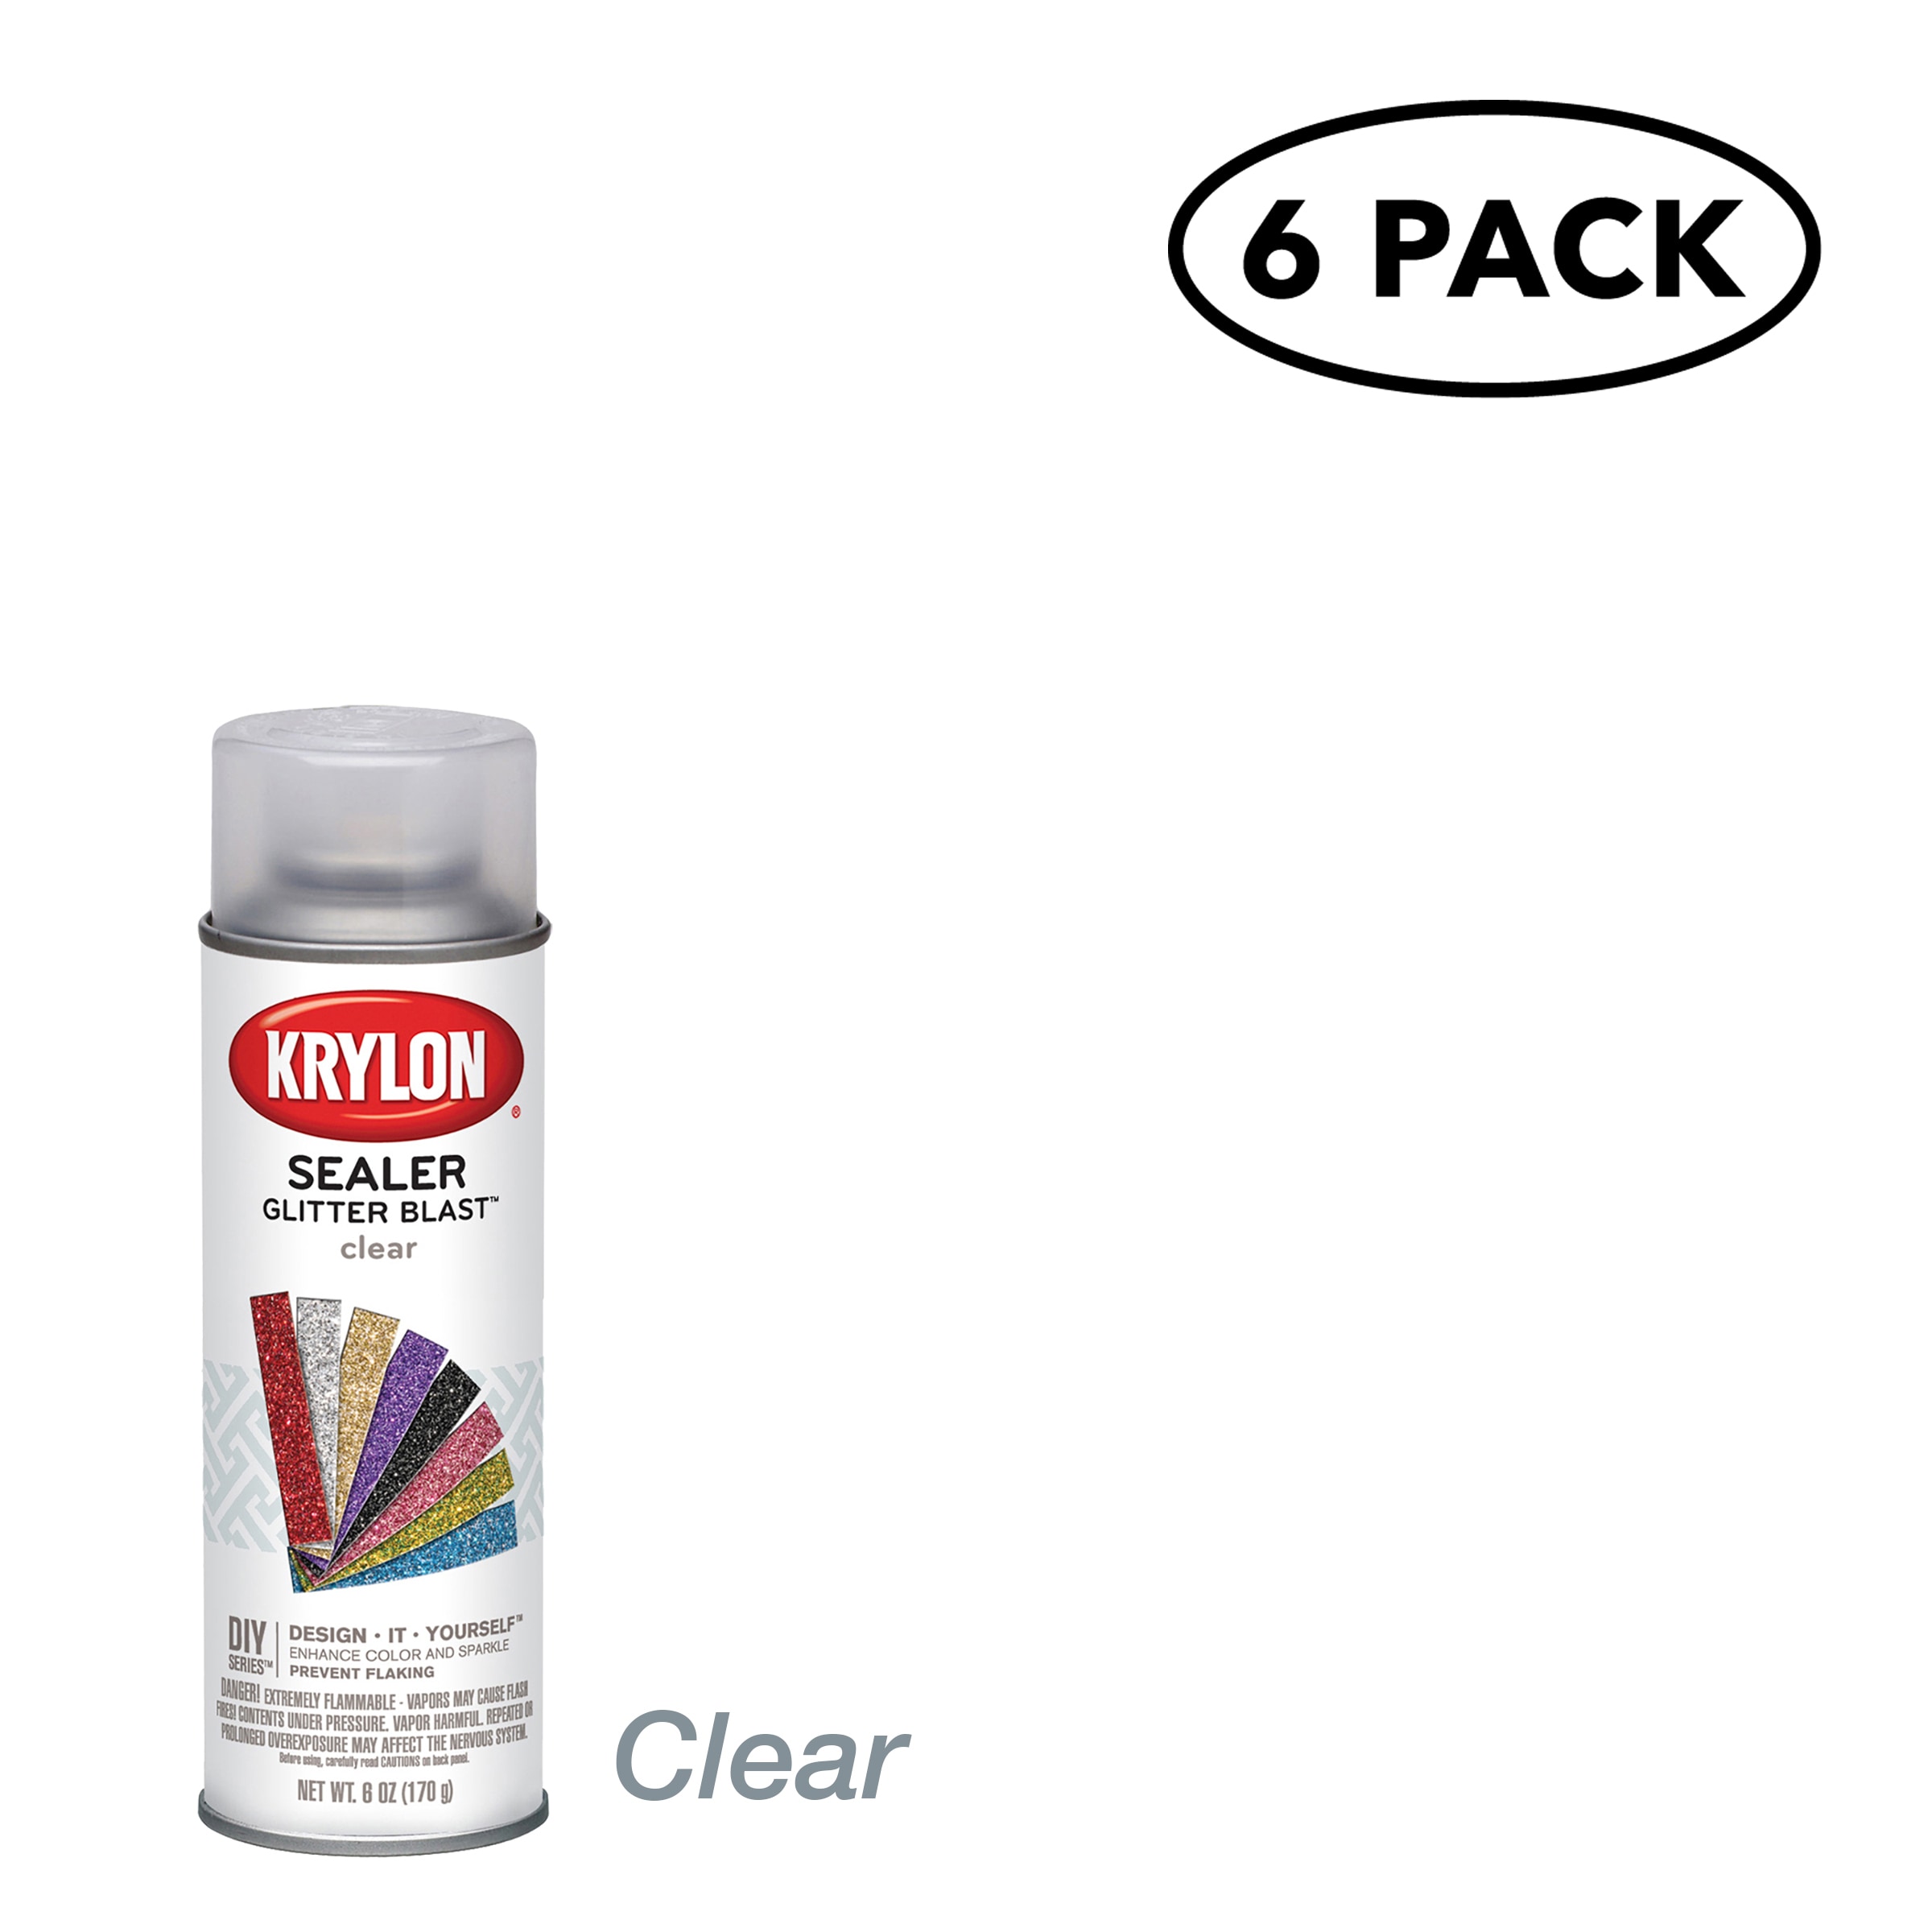 Krylon K03801A00 Glitter Blast Glitter Spray Paint for Craft Projects,  Golden Glow, 5.75 oz